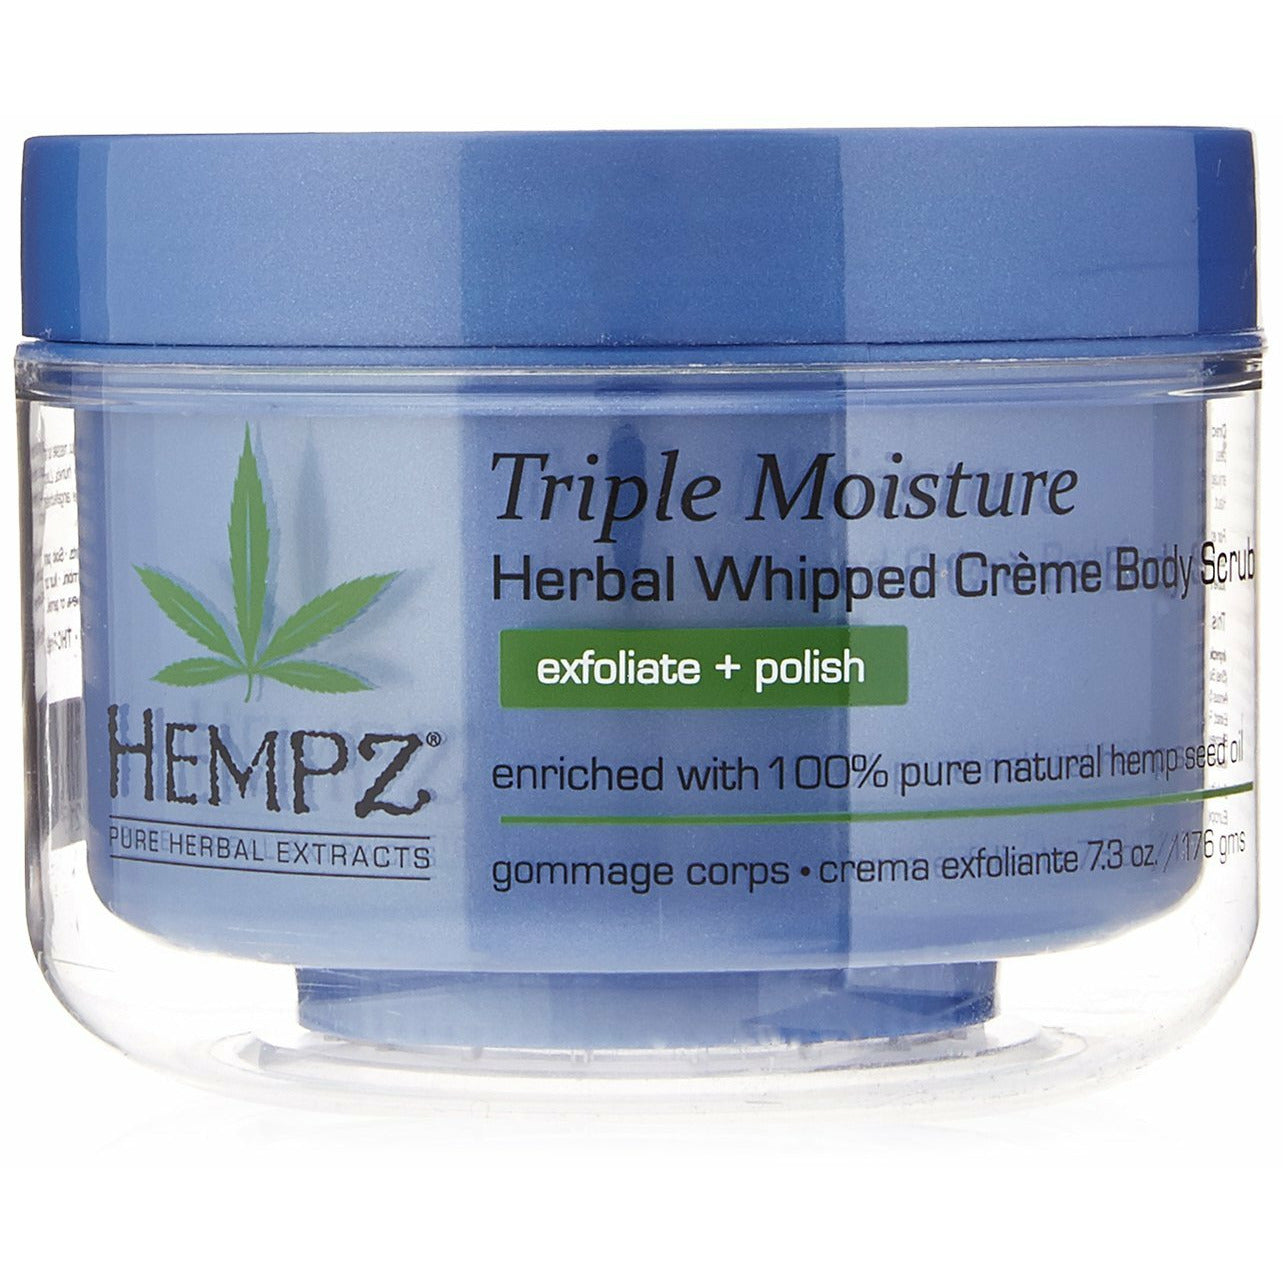 Hempz Triple Moisture Herbal Whipped Creme Body Scrub, Light Blue, Enchanted Grapefruit/Sparkling Peach, 7.3 Fluid Ounce